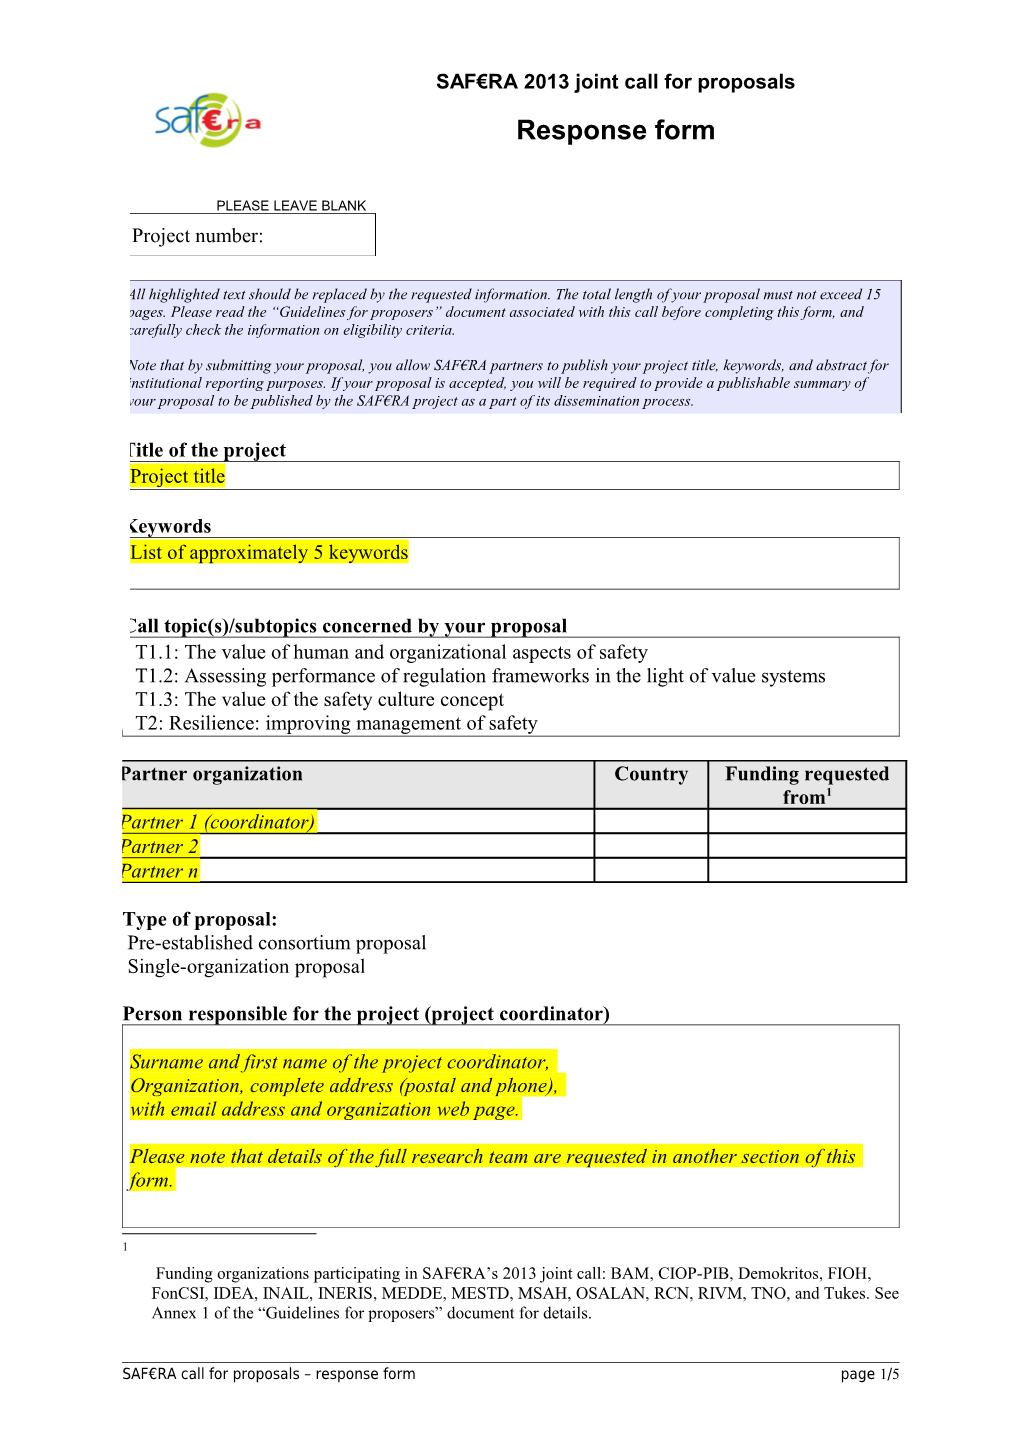 SAF RA Response Form